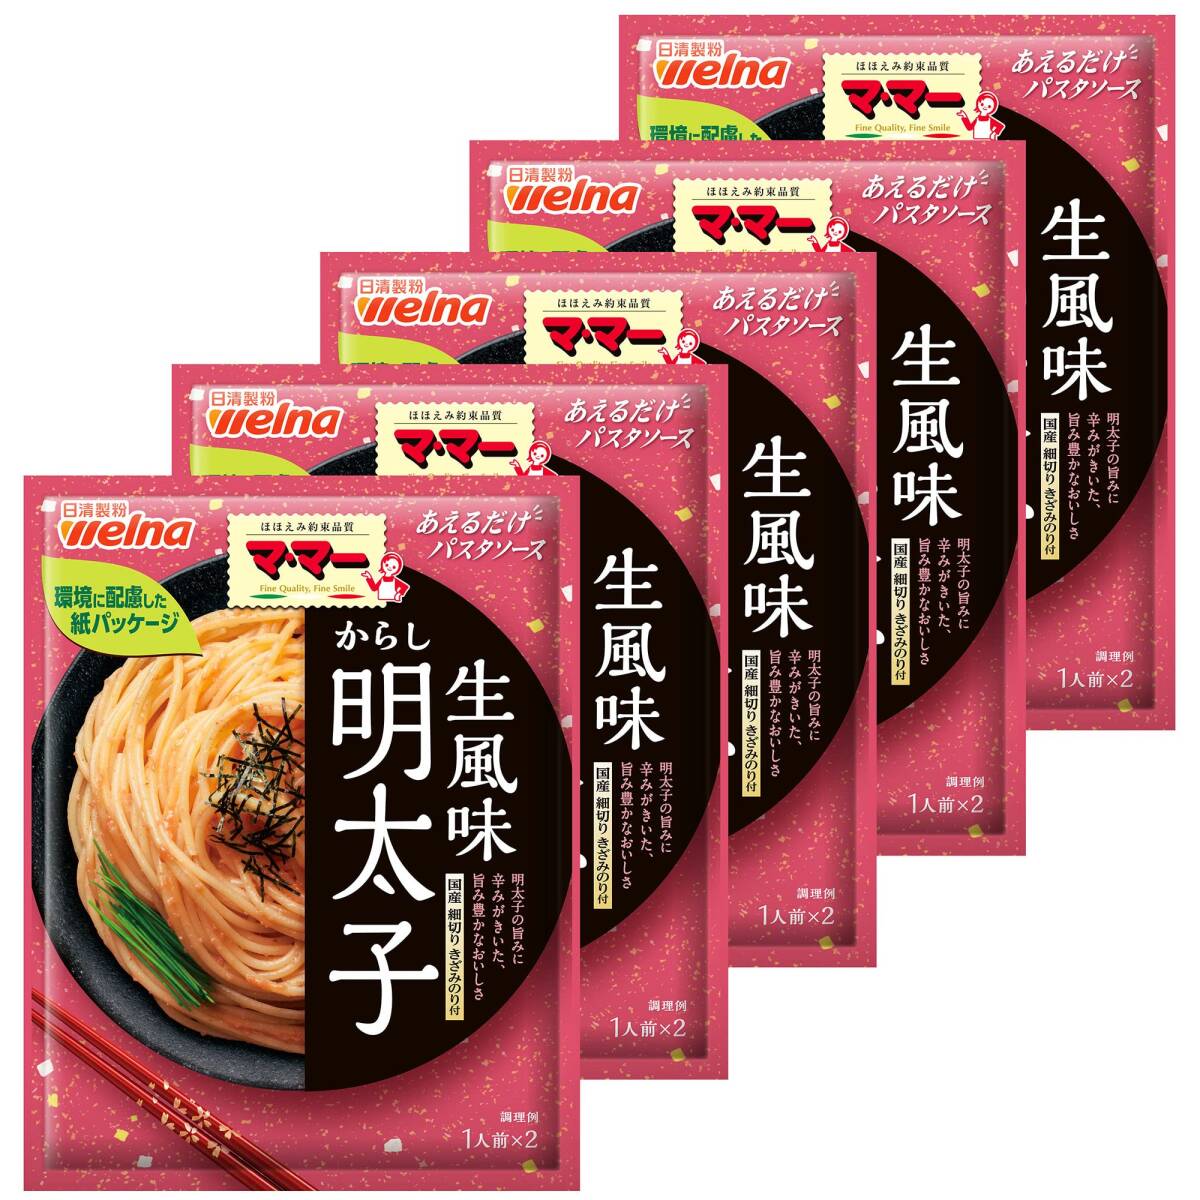 ma*ma-... only pasta sauce mustard Karashi walleye pollack roe raw manner taste 48g ×5 piece 